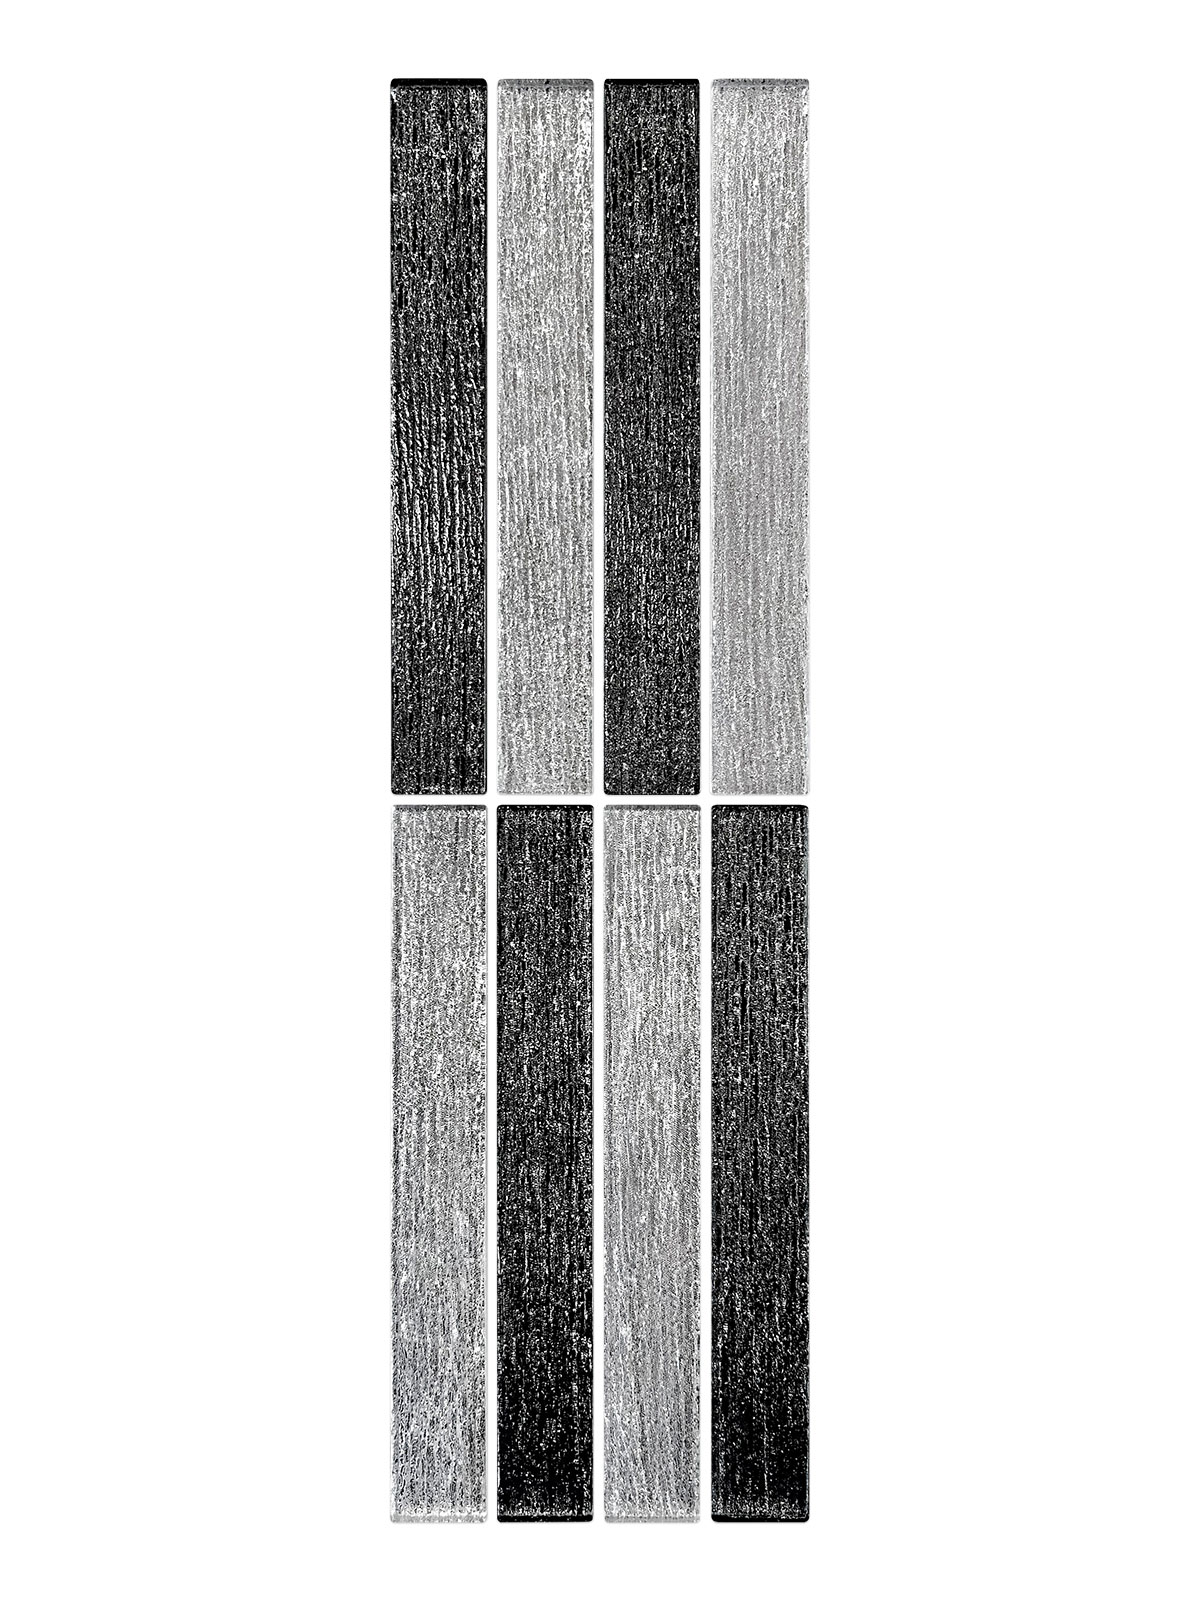 Shimmery Textured Black and White Glass Backsplash Tile BA8024 1